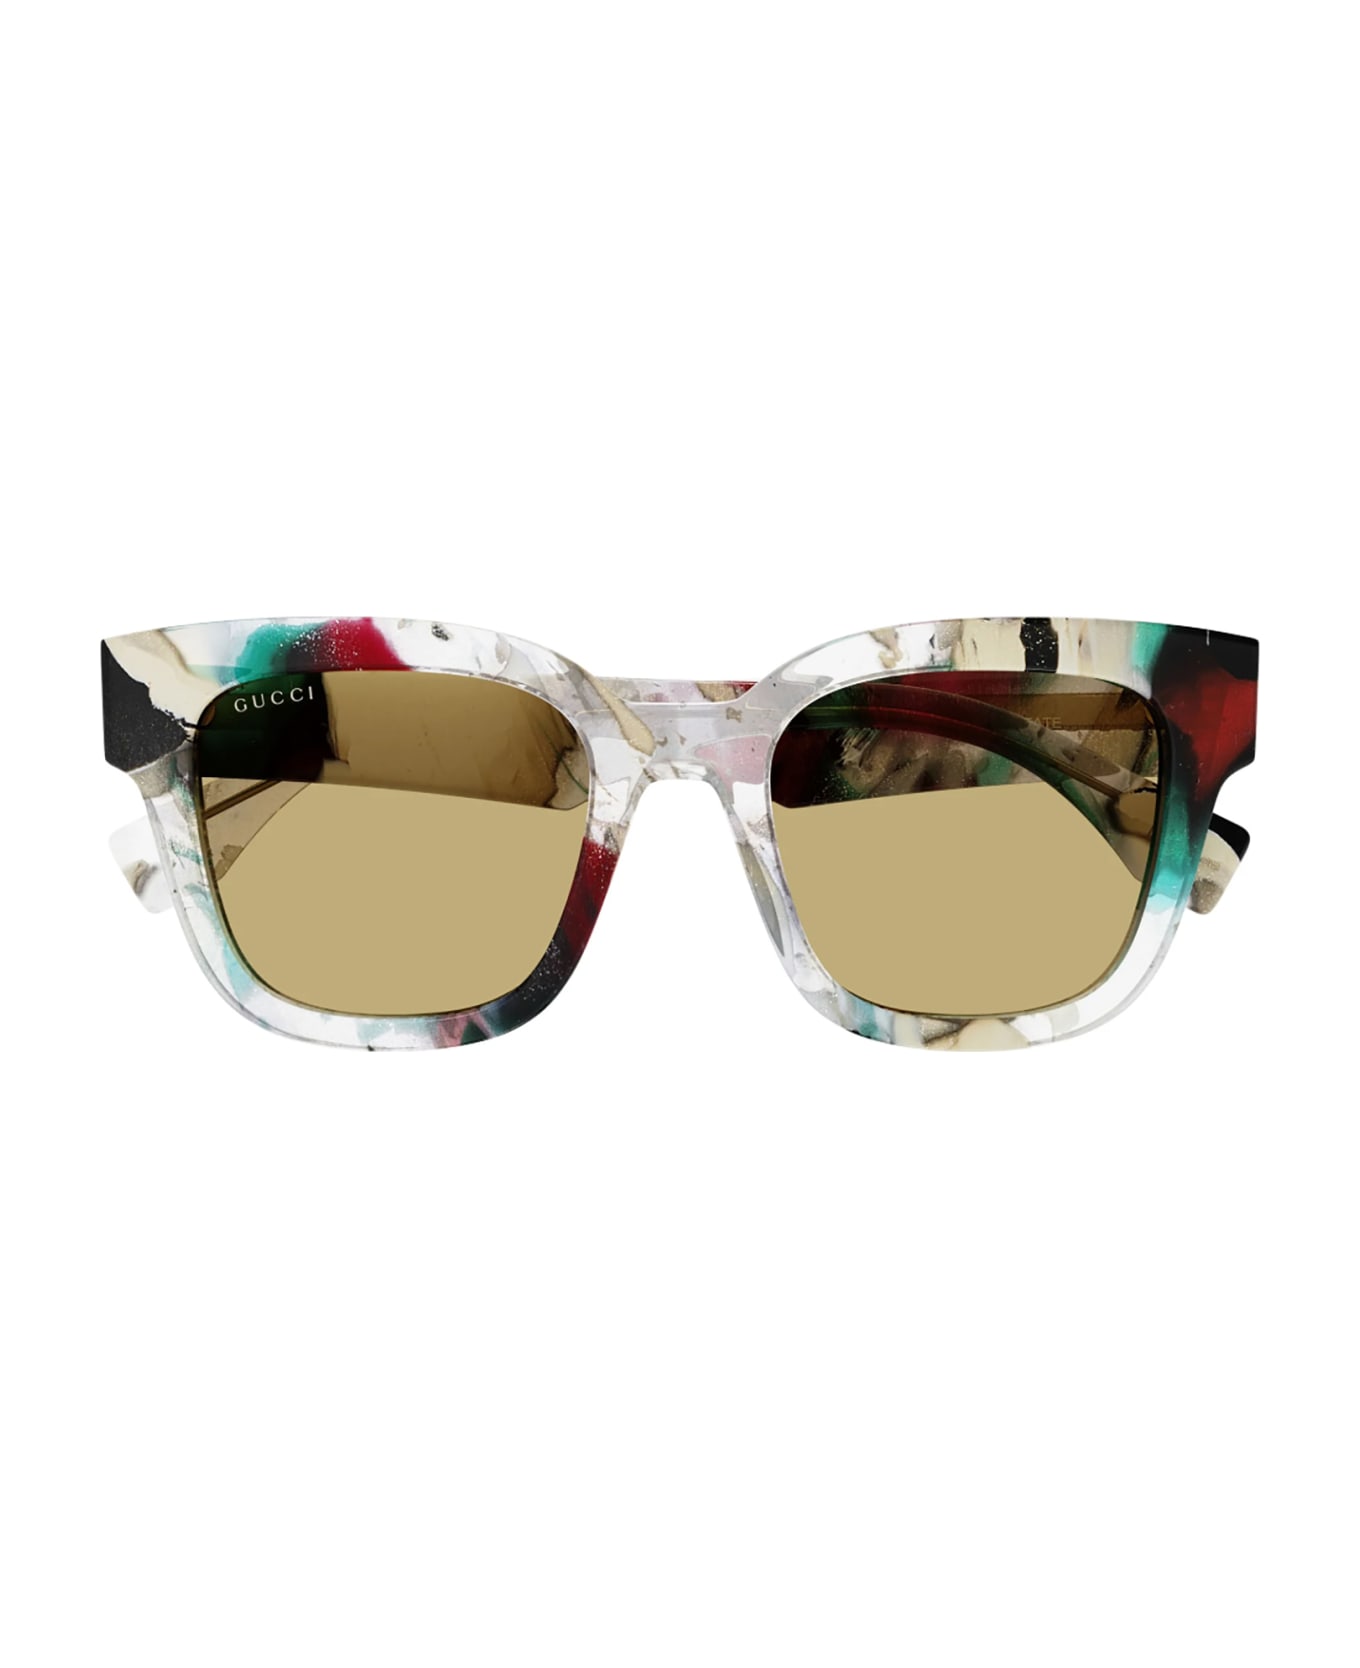 Gucci Eyewear GG1624S Sunglasses - Multicolor Multicolor